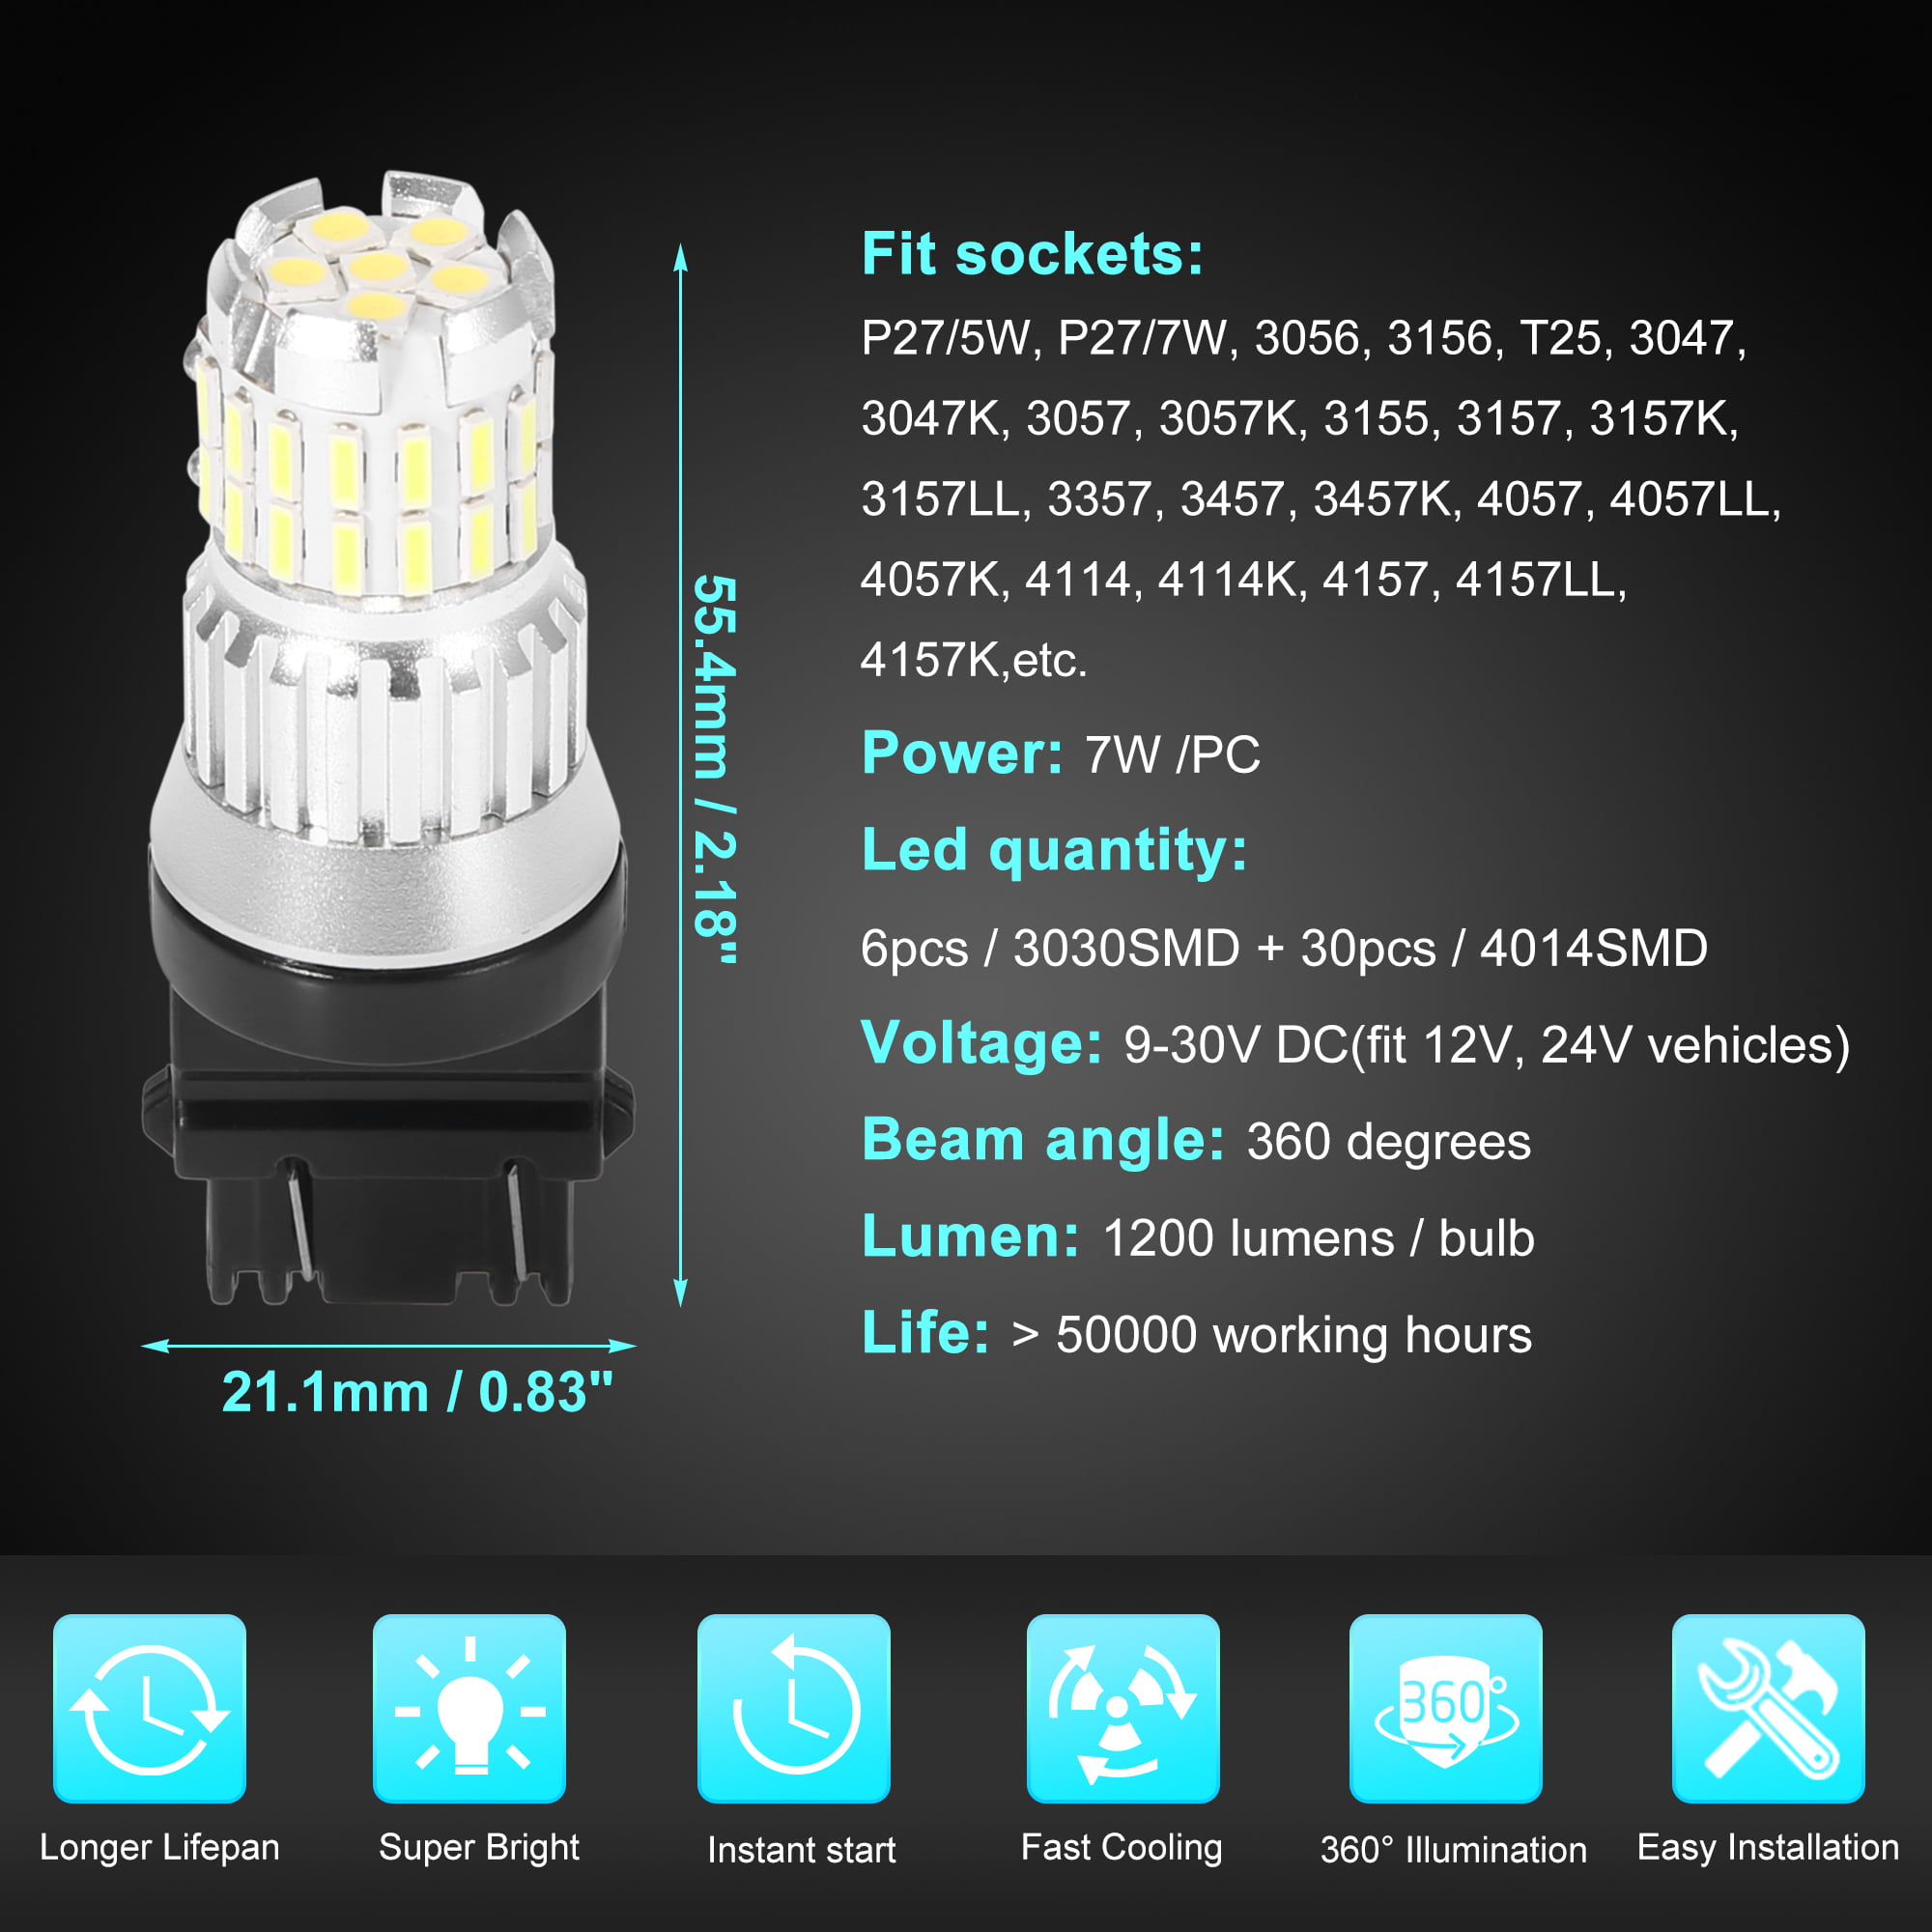 X AUTOHAUX 2 Pcs T25 3157 White LED Light Bulbs Replacement Universal for Turn Signal Light